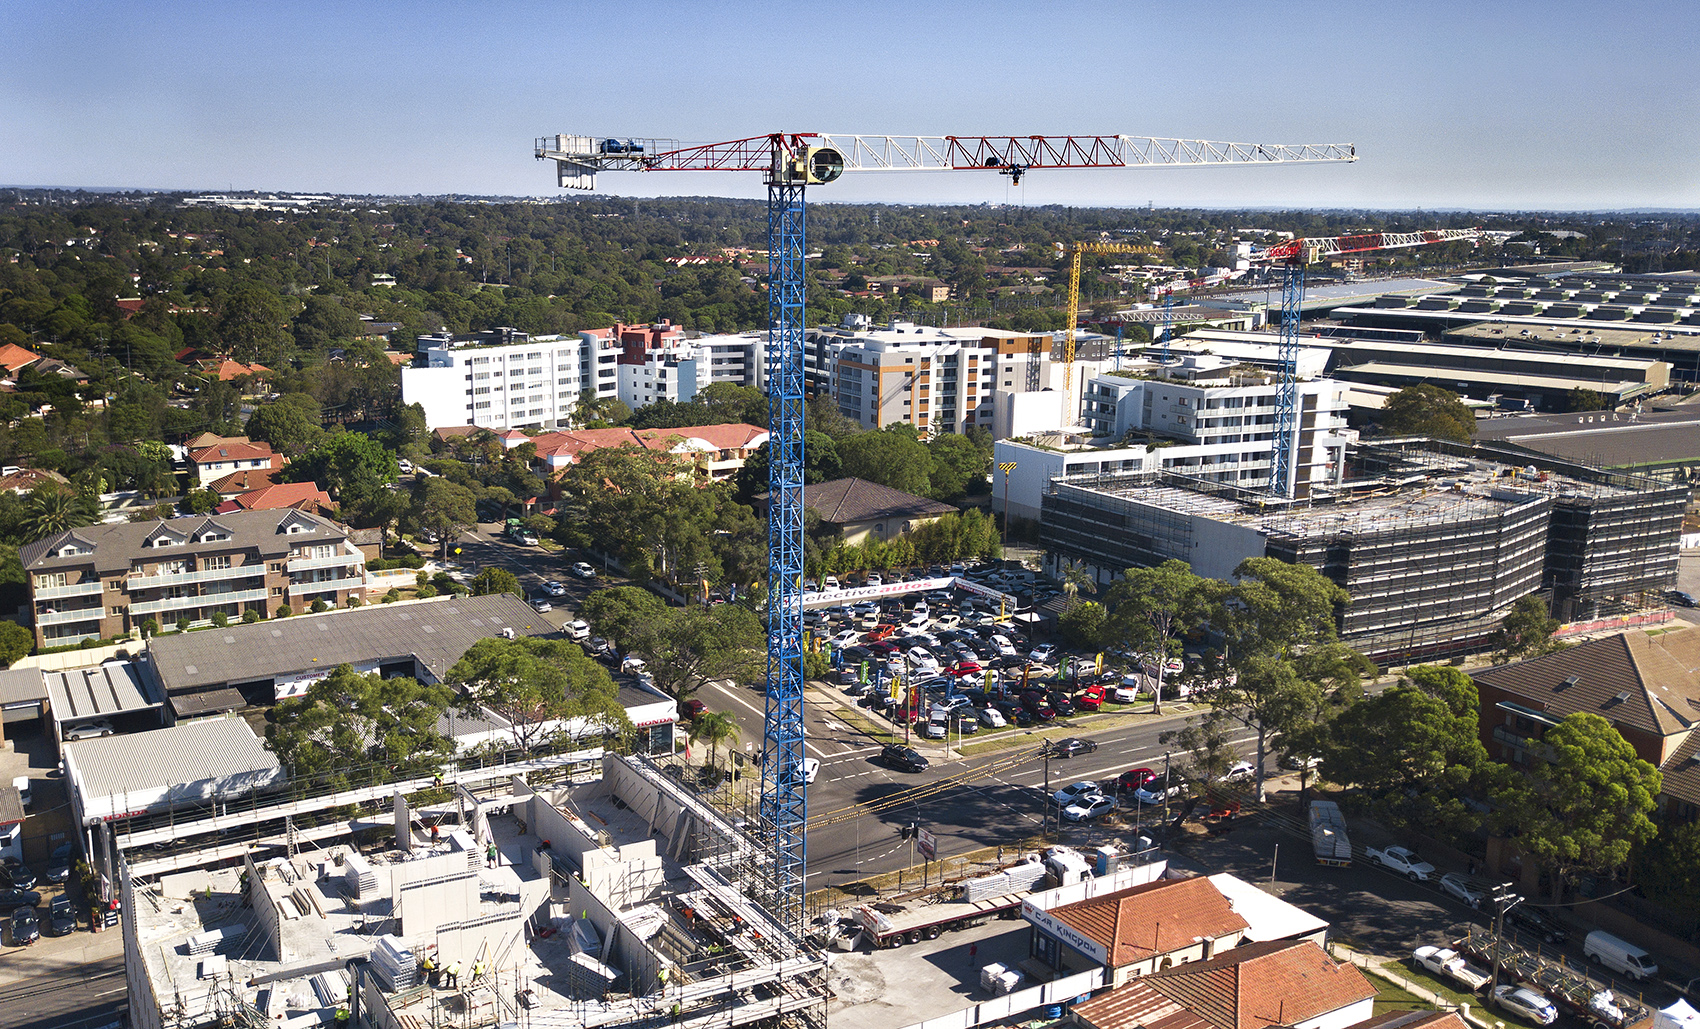 Cranepedia: Strictly Cranes sells new Raimondi cranes to various clients across Sydney